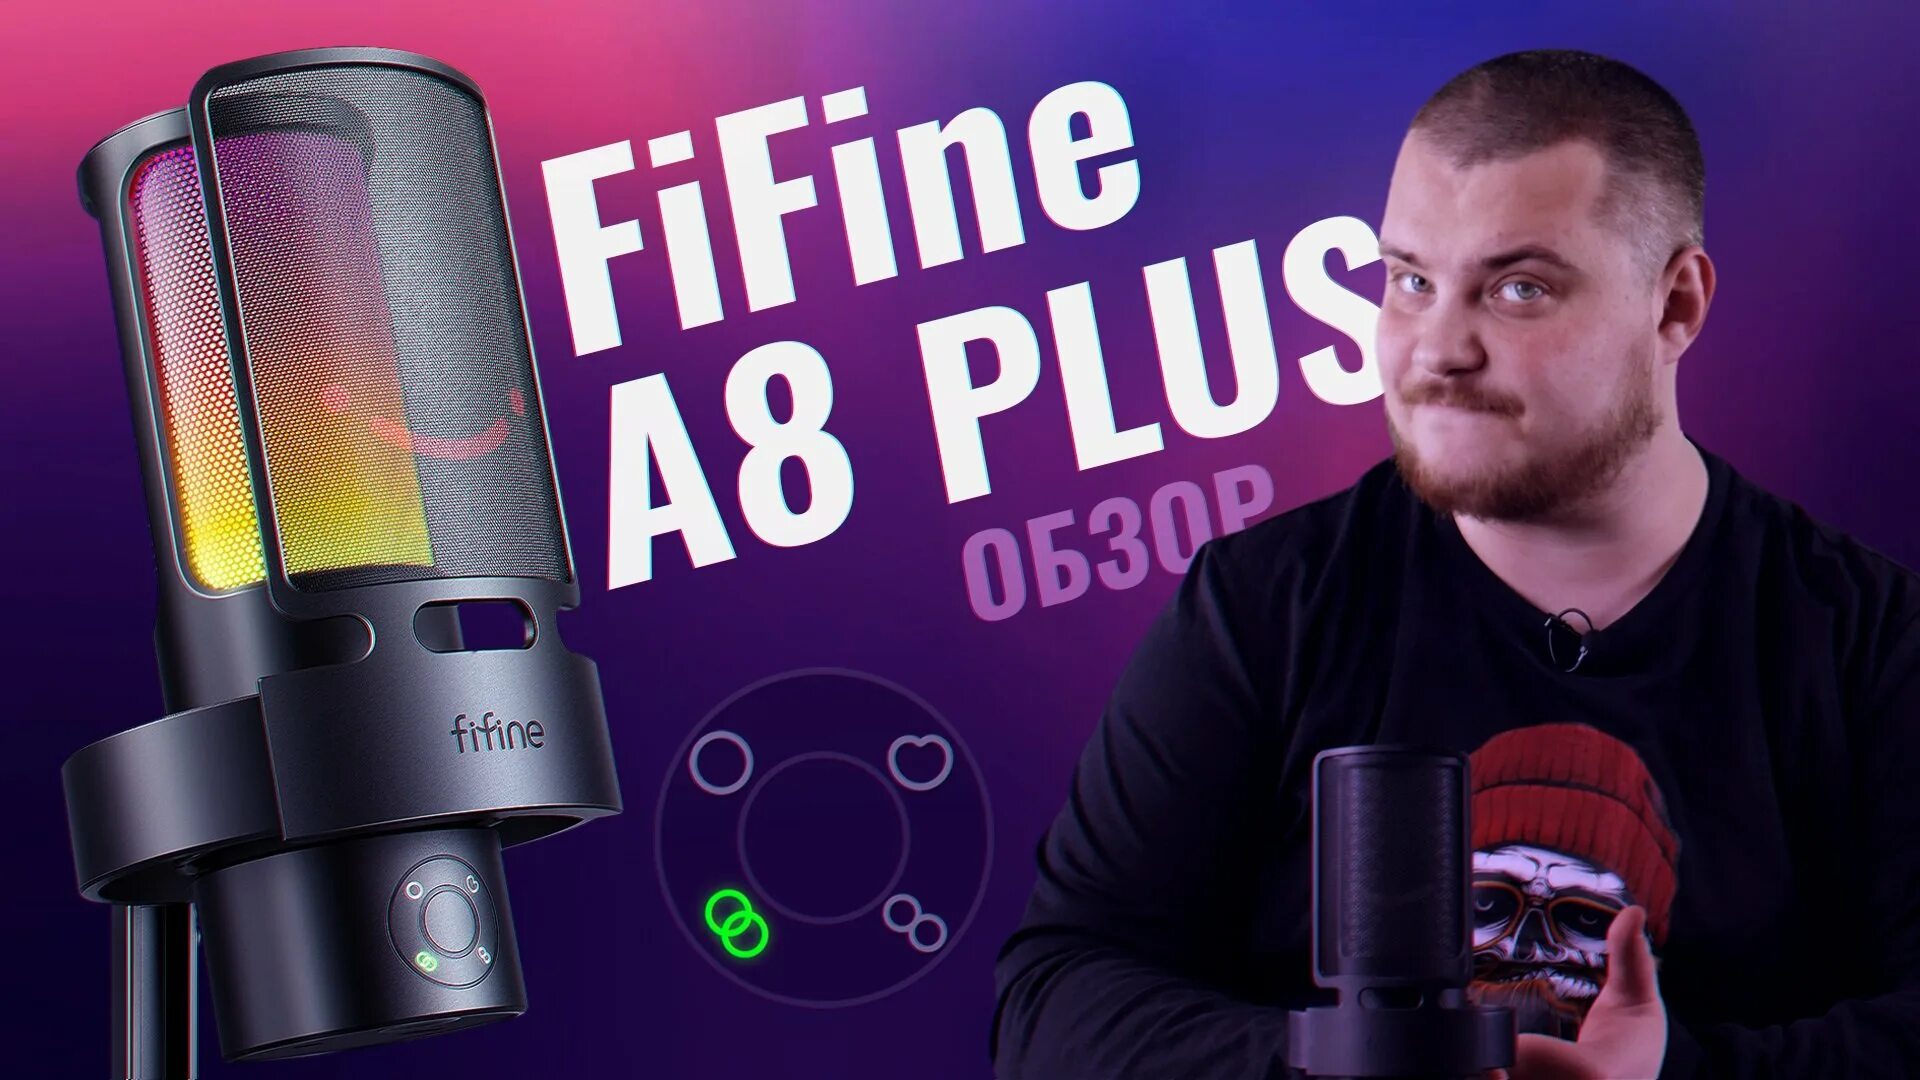 Microphone Fifine a8. FIFAIN a8 Plus микрофон. Fifine ampligame a8 Plus. Fifine 860.